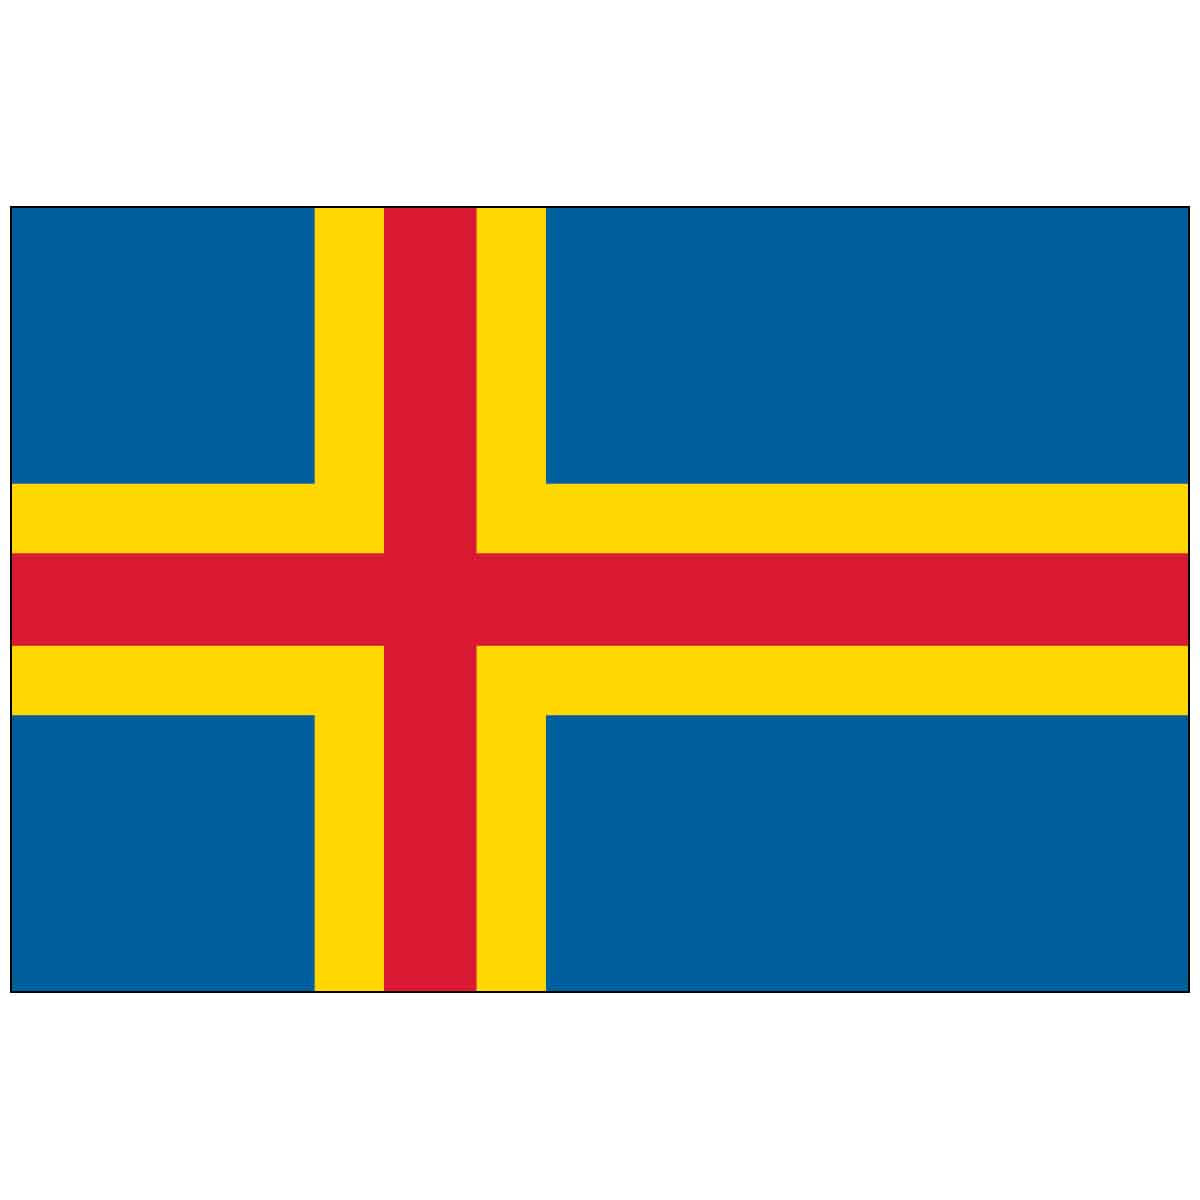 3' x 5' Aland Islands World Flag